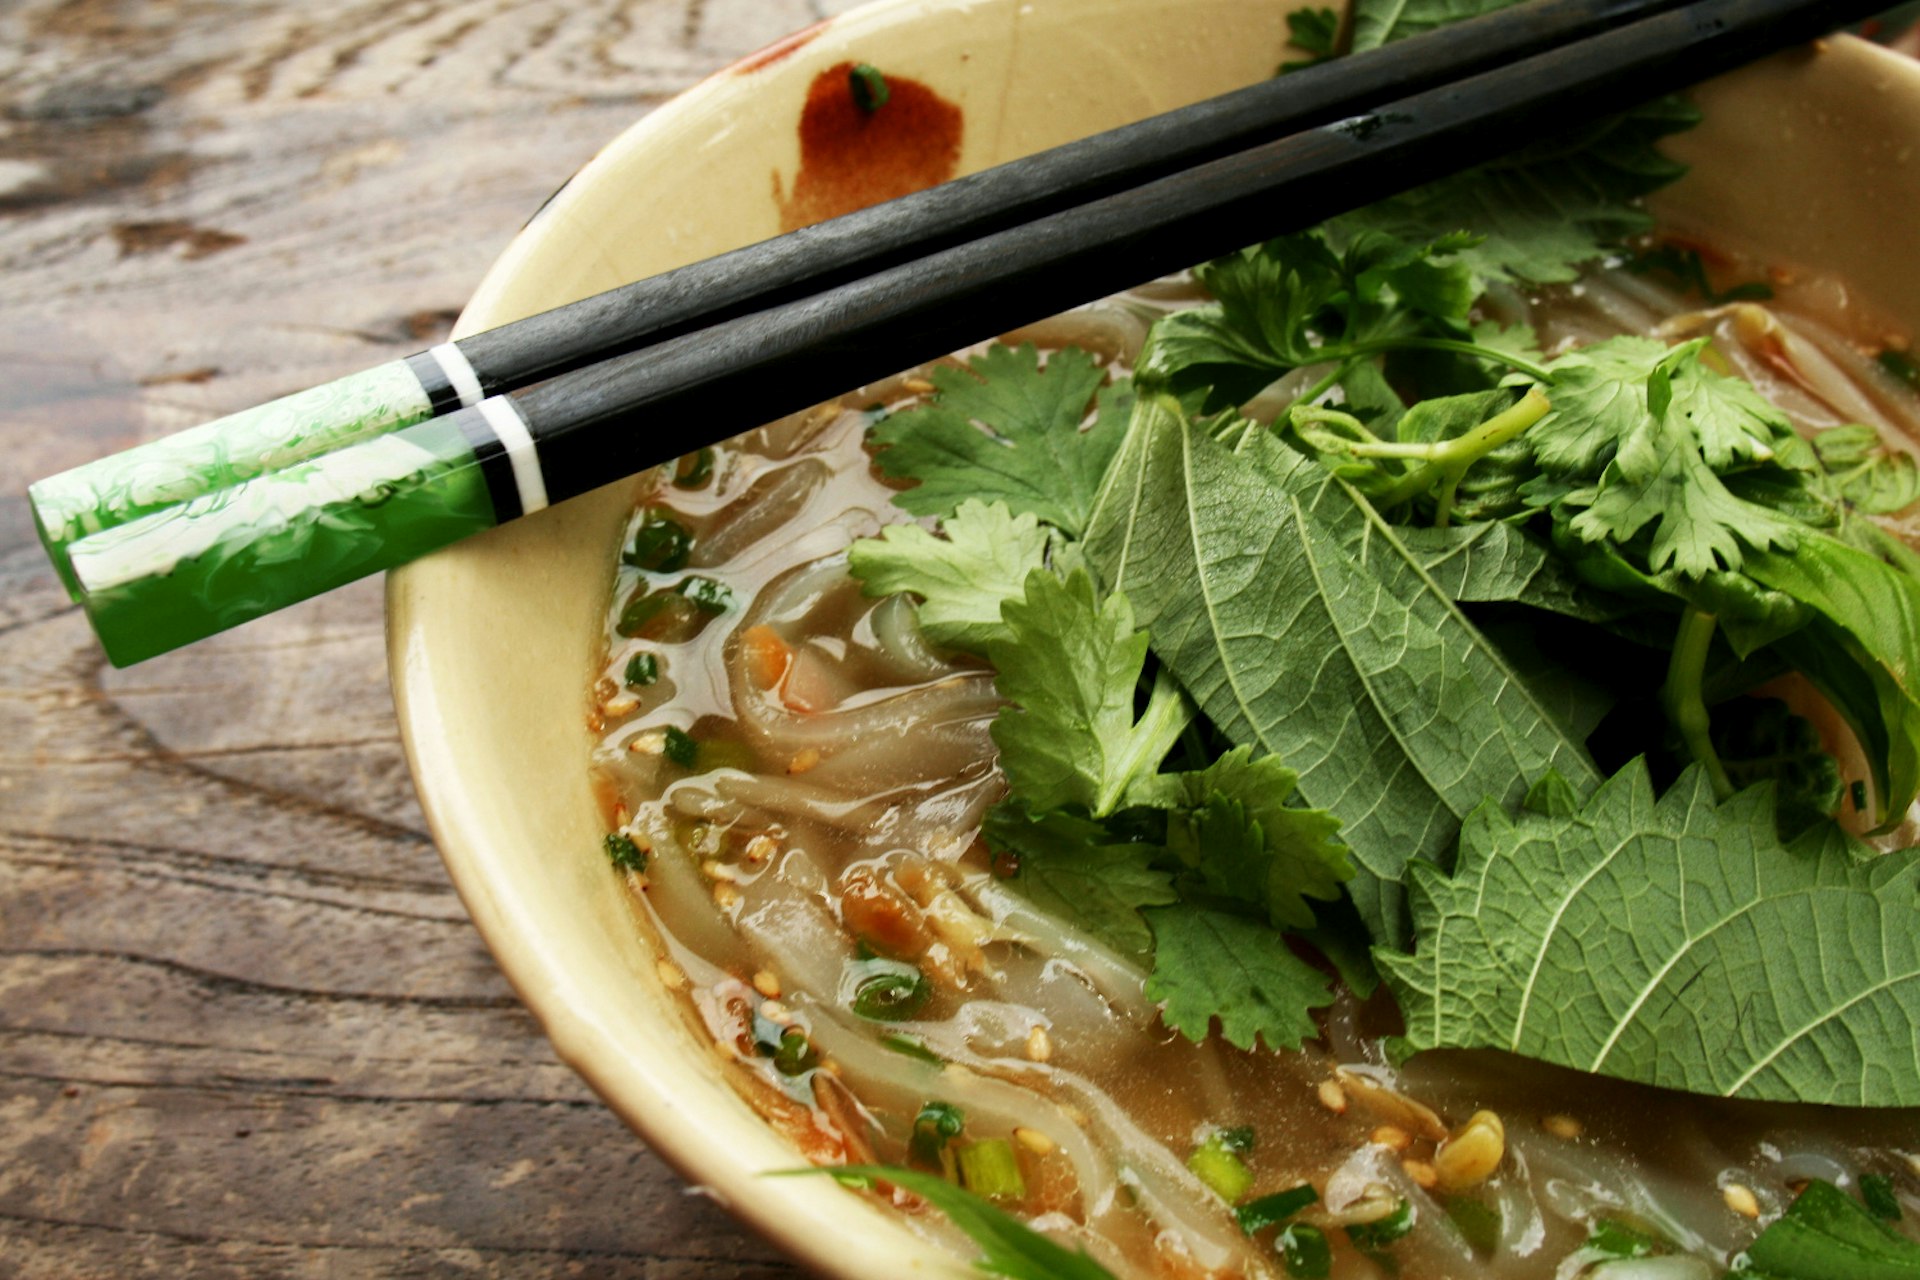 SAIGON, VIETNAM - 2006/08/14: Pho - Vietnamese noodle soup originally from Hanoi.. (Photo by John S Lander/LightRocket via Getty Images)